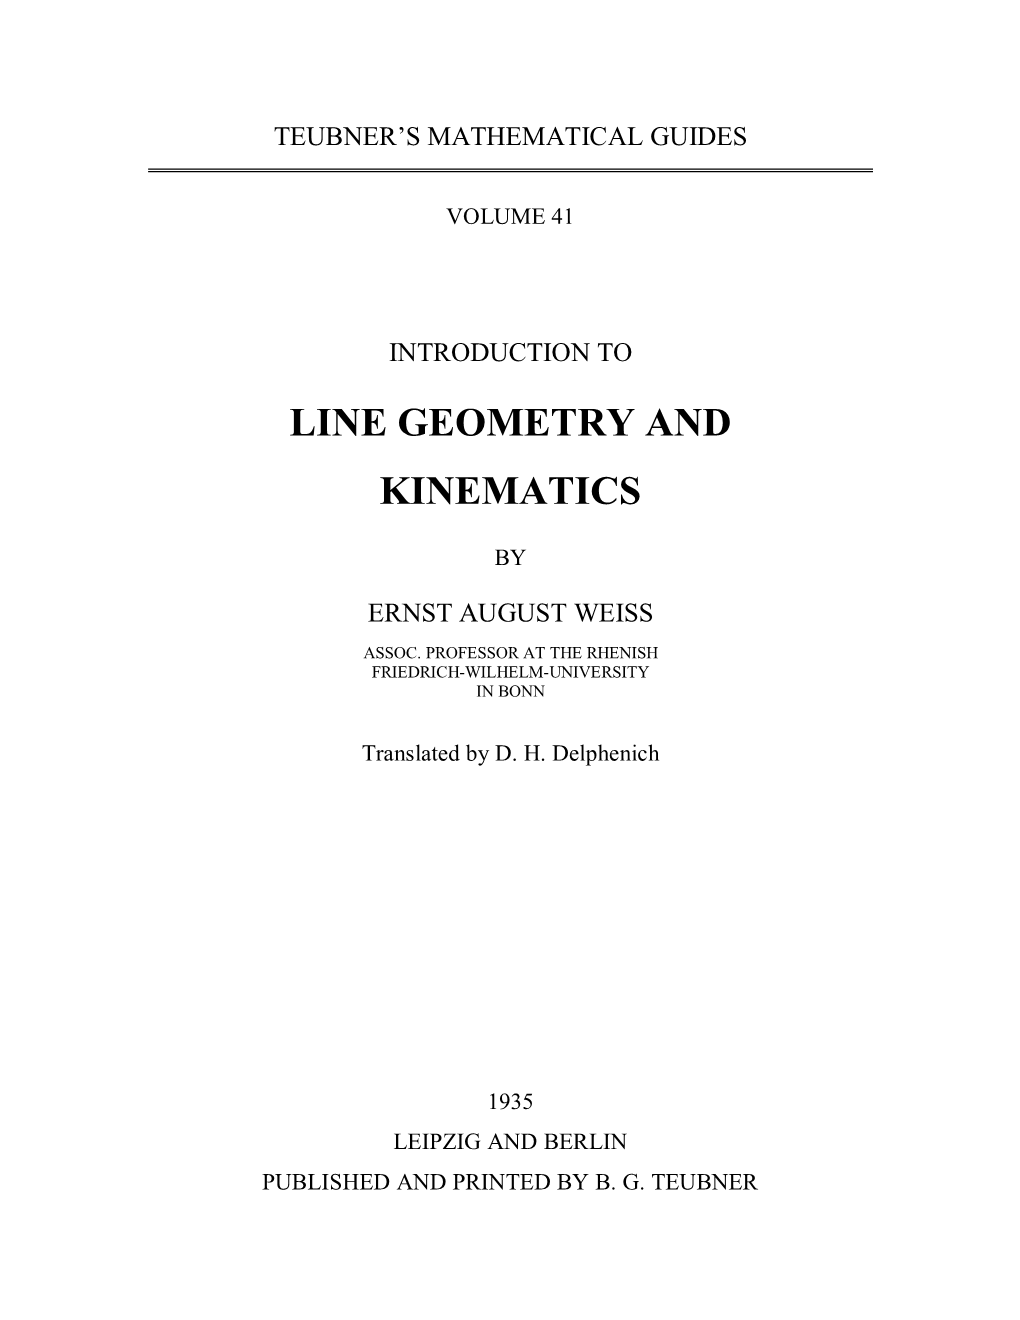 Intro to Line Geom and Kinematics